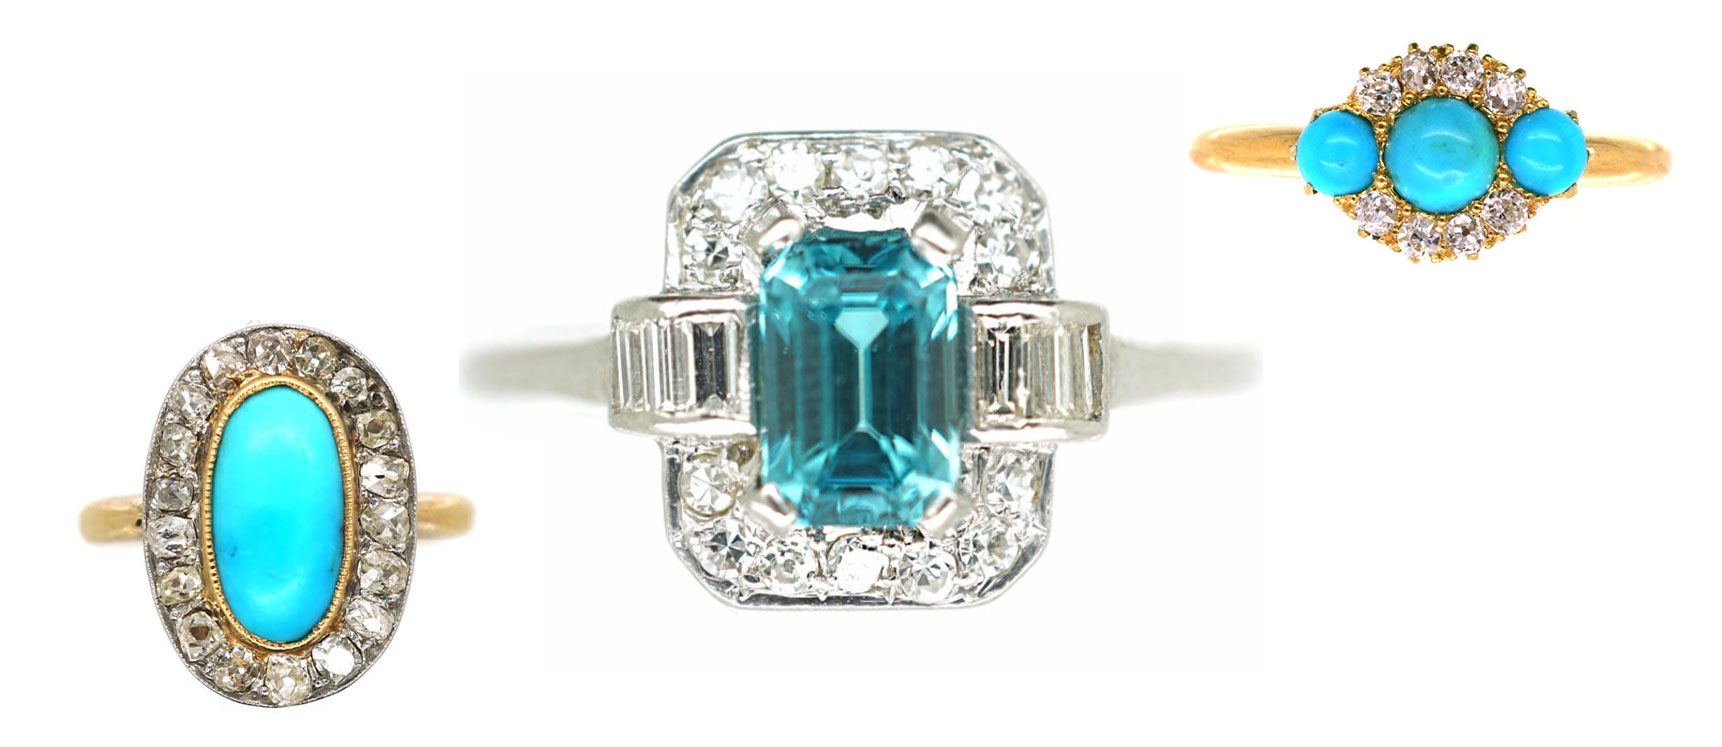 Antique tanzanite, zircon and turquoise rings